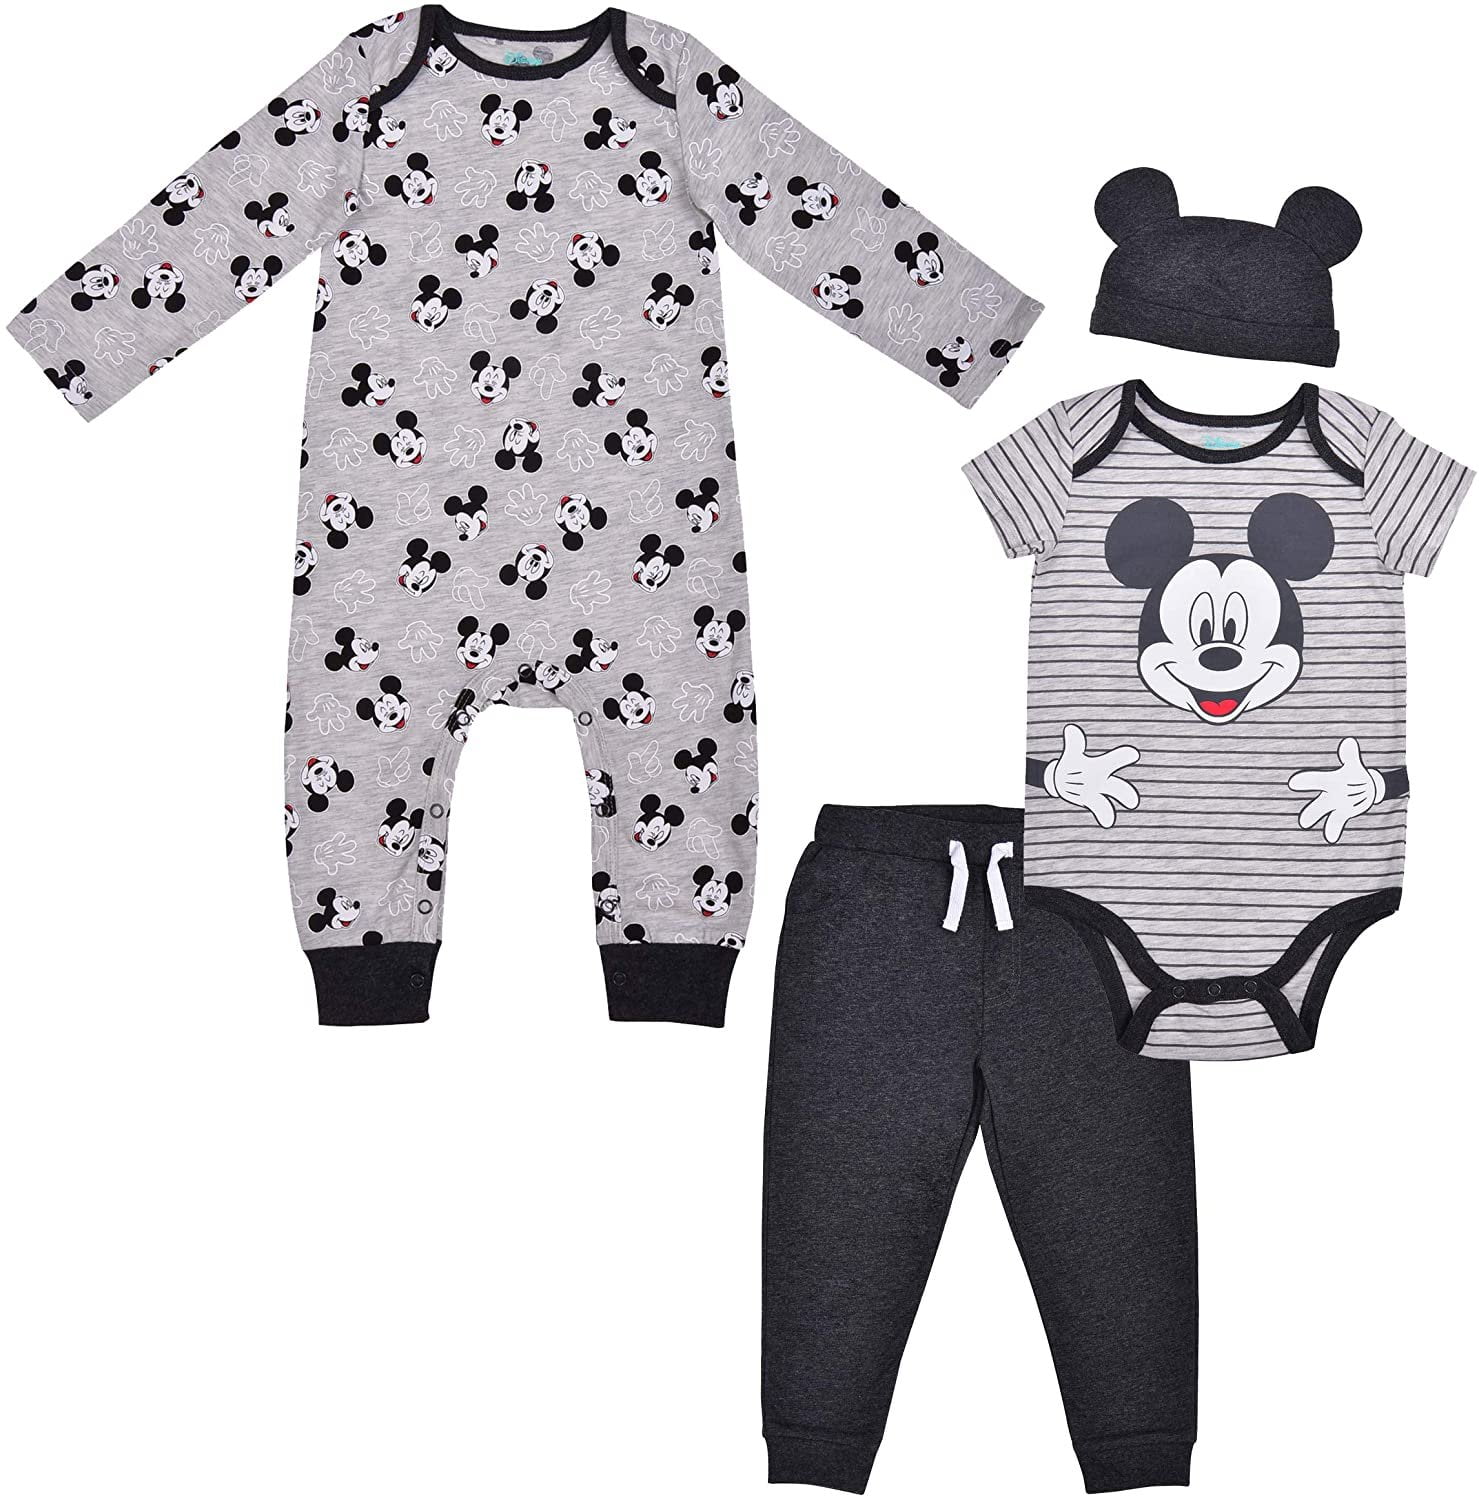 NEW Disney Baby Mickey Mouse sleepsuit All In One Romper Babygrow Nightwear gift 